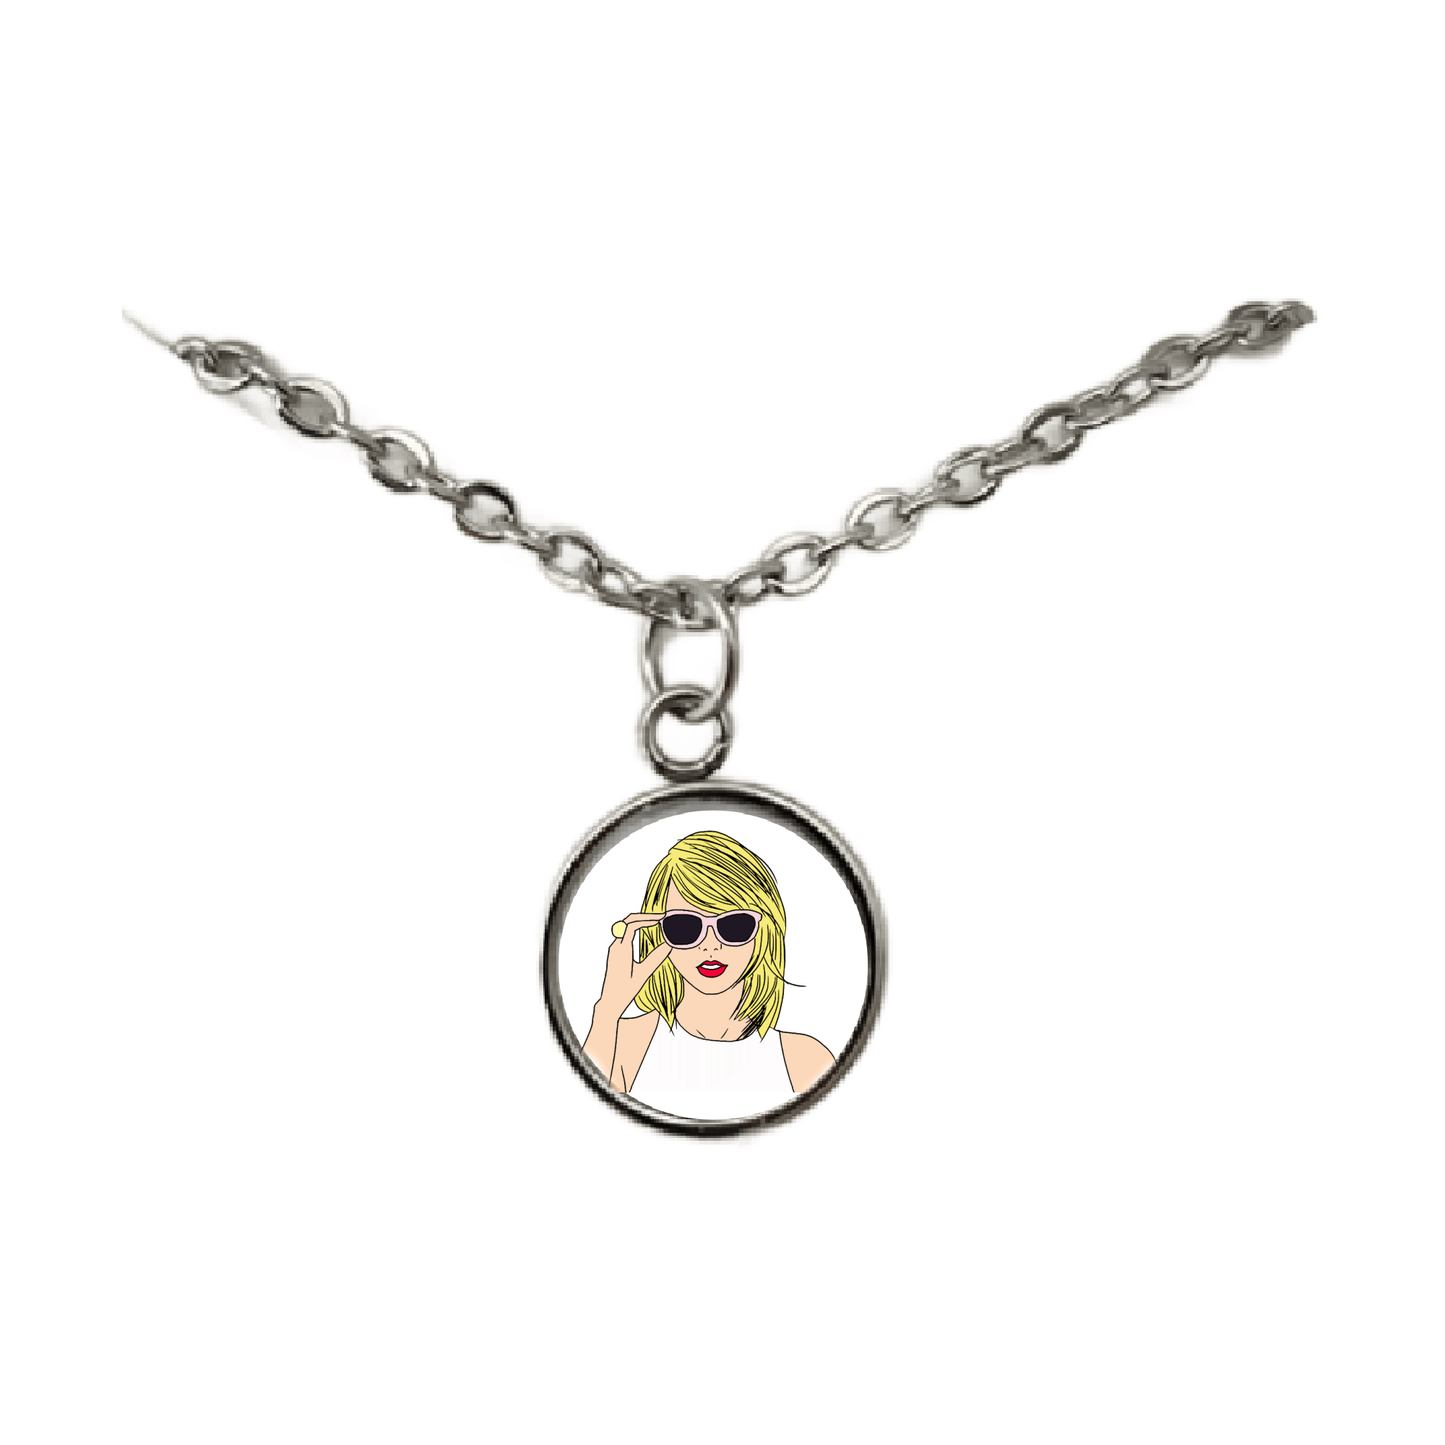 Taylor Swift pendant necklace - choose your design!